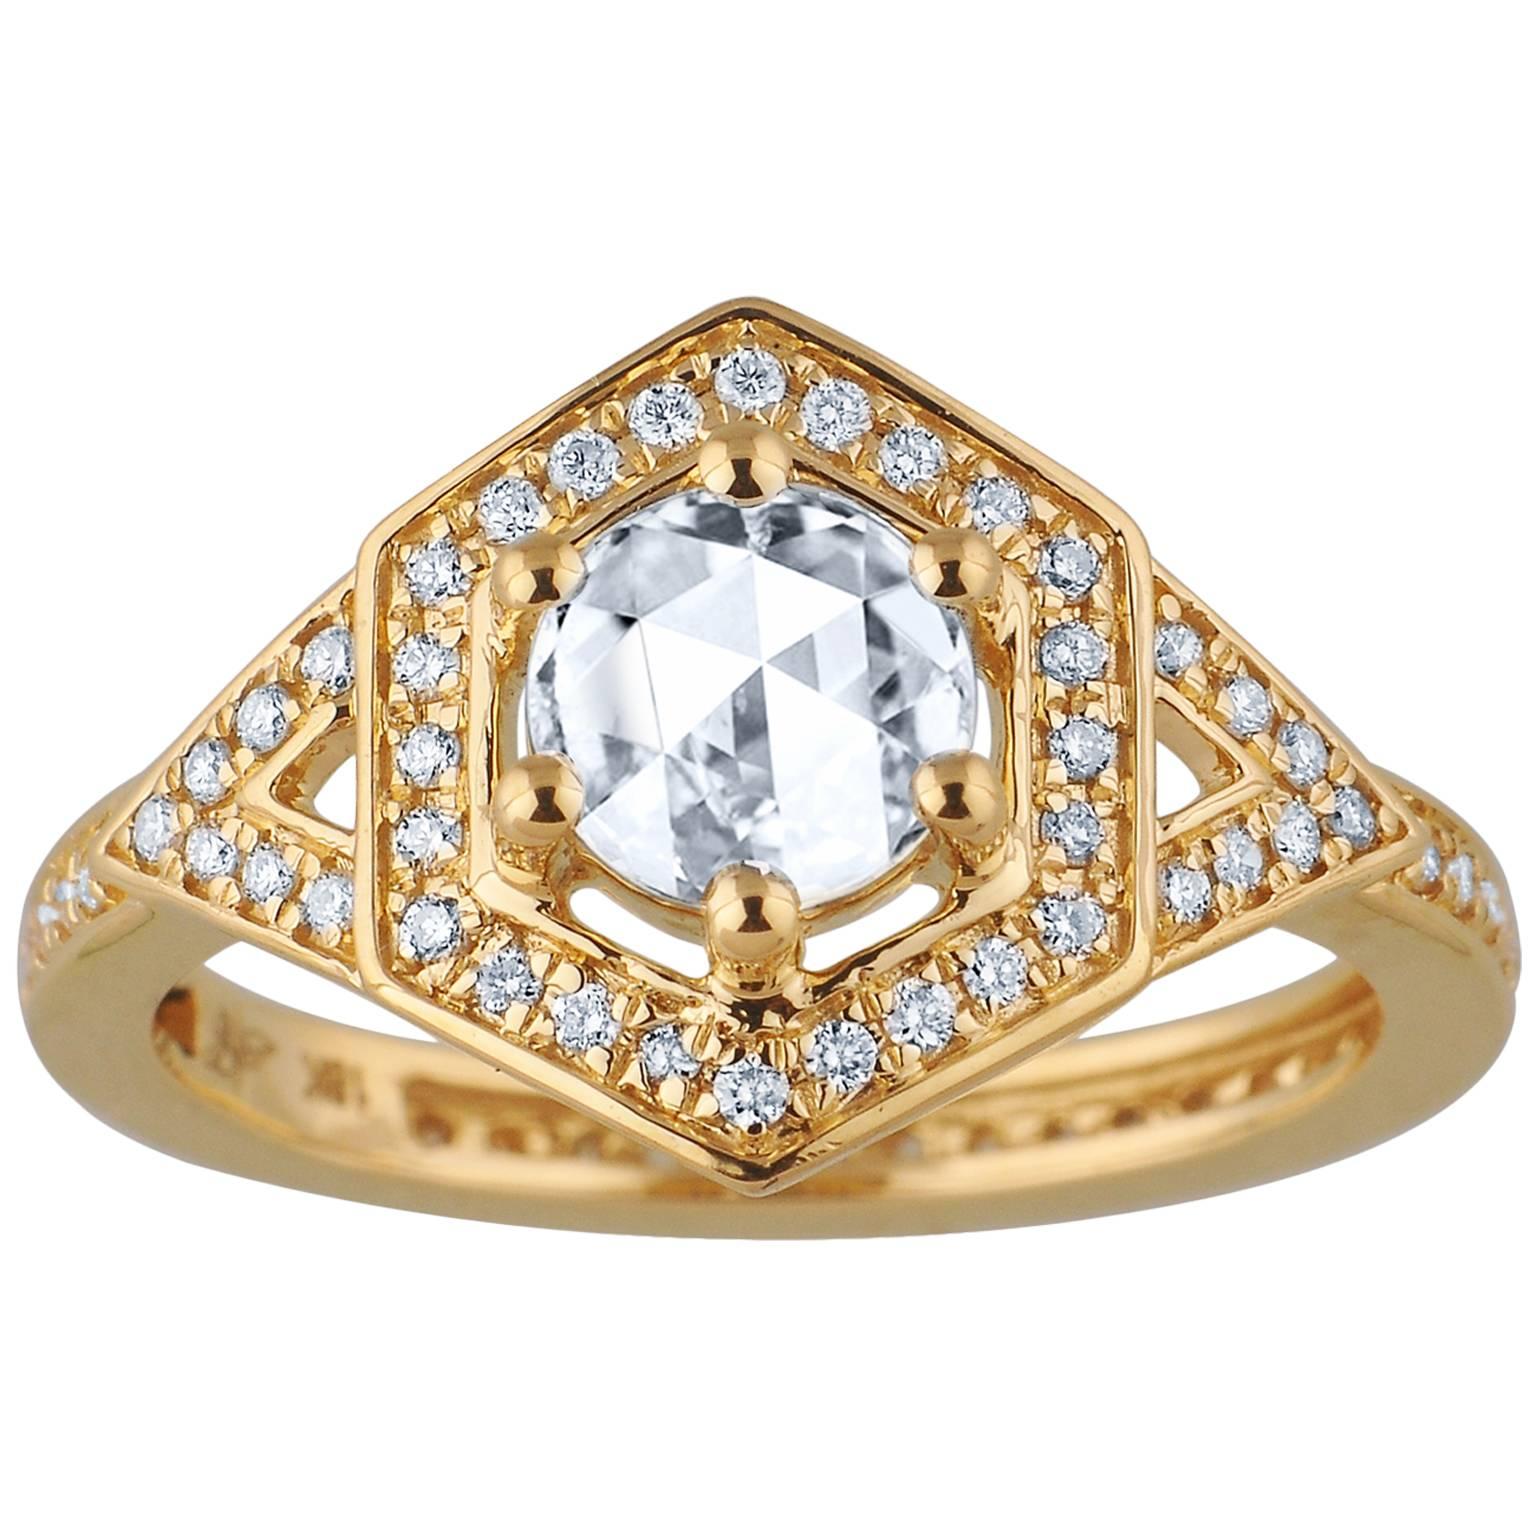 Jade Jagger Connected Hexagonal Diamond Ring